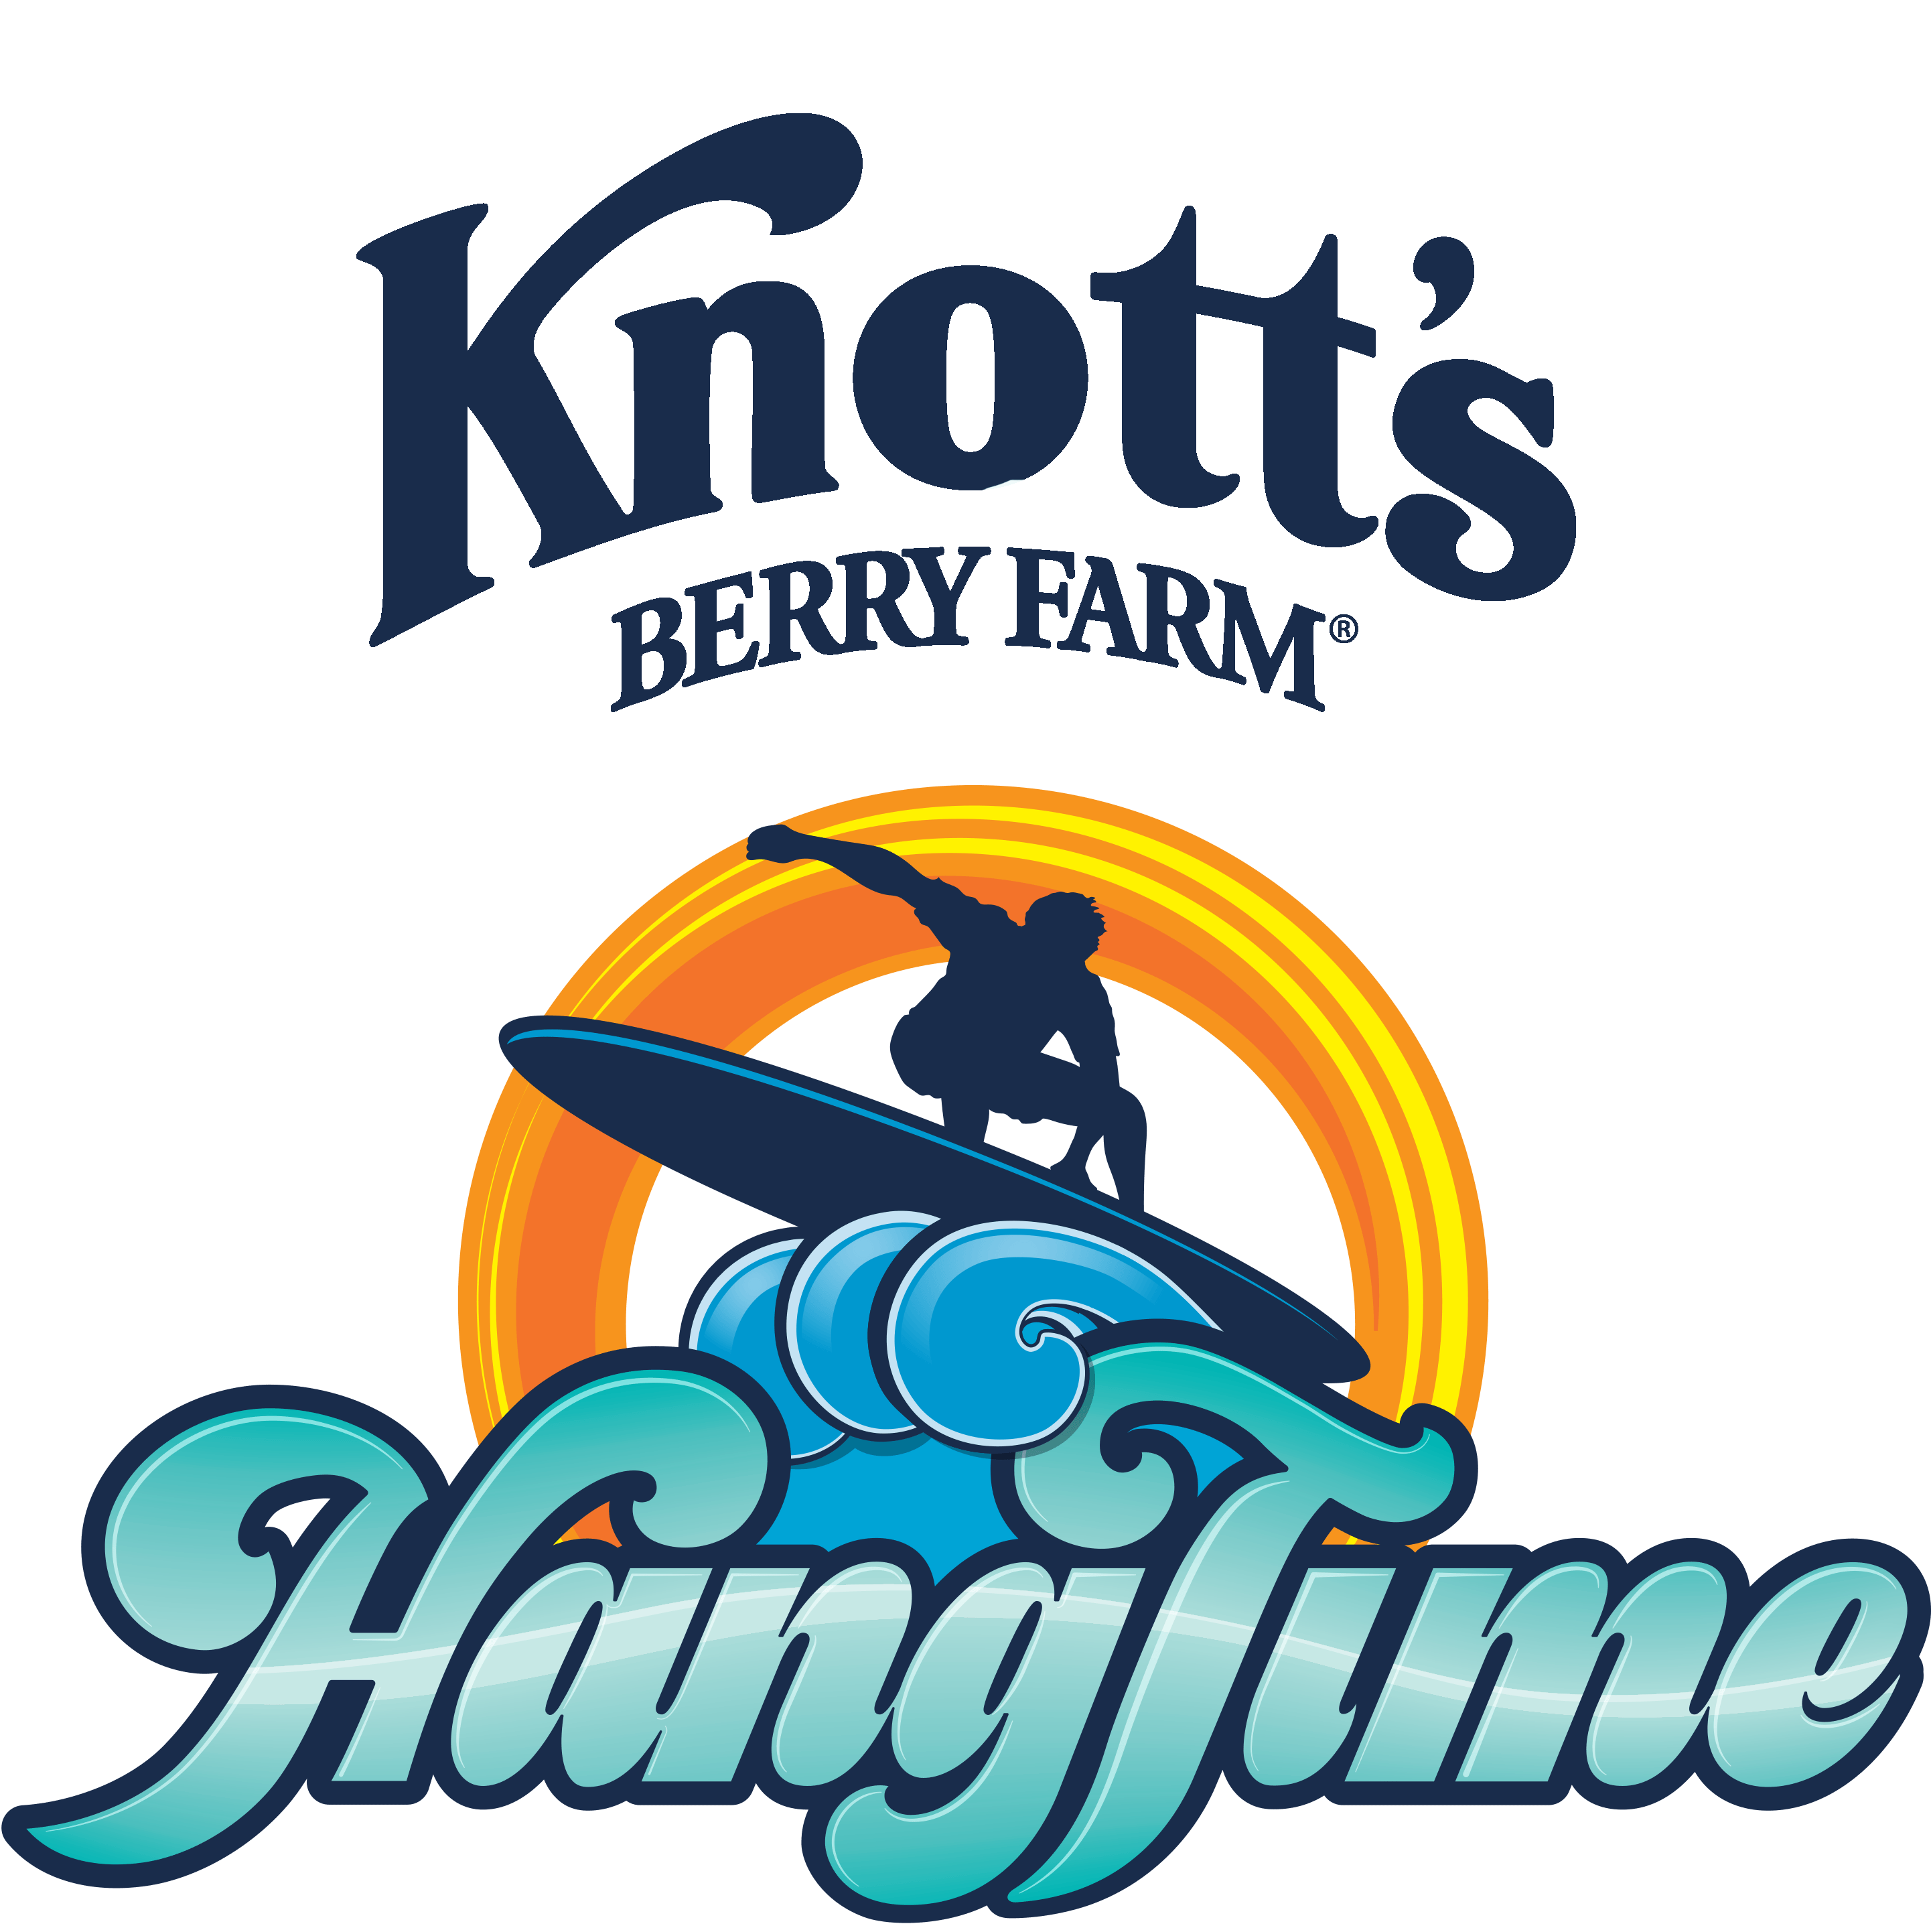 Knotts Logo - Knotts Berry Farm Logo 95395 | USBDATA